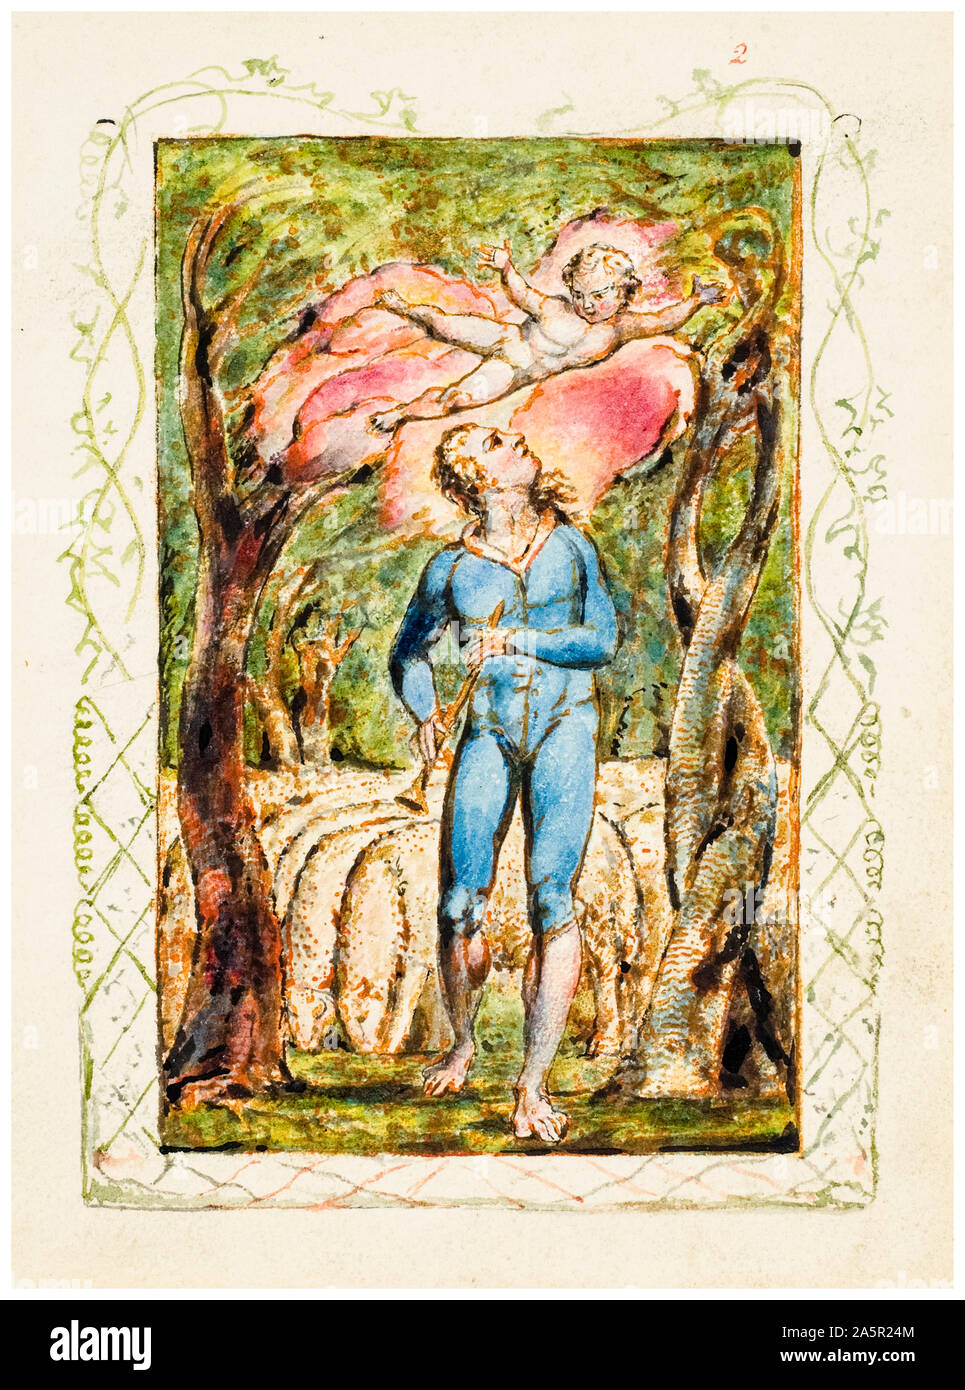 William Blake, Songs of Innocence, Frontispiz, Aquarellmalerei über Stift und Tinte, Illustration, um 1825 Stockfoto